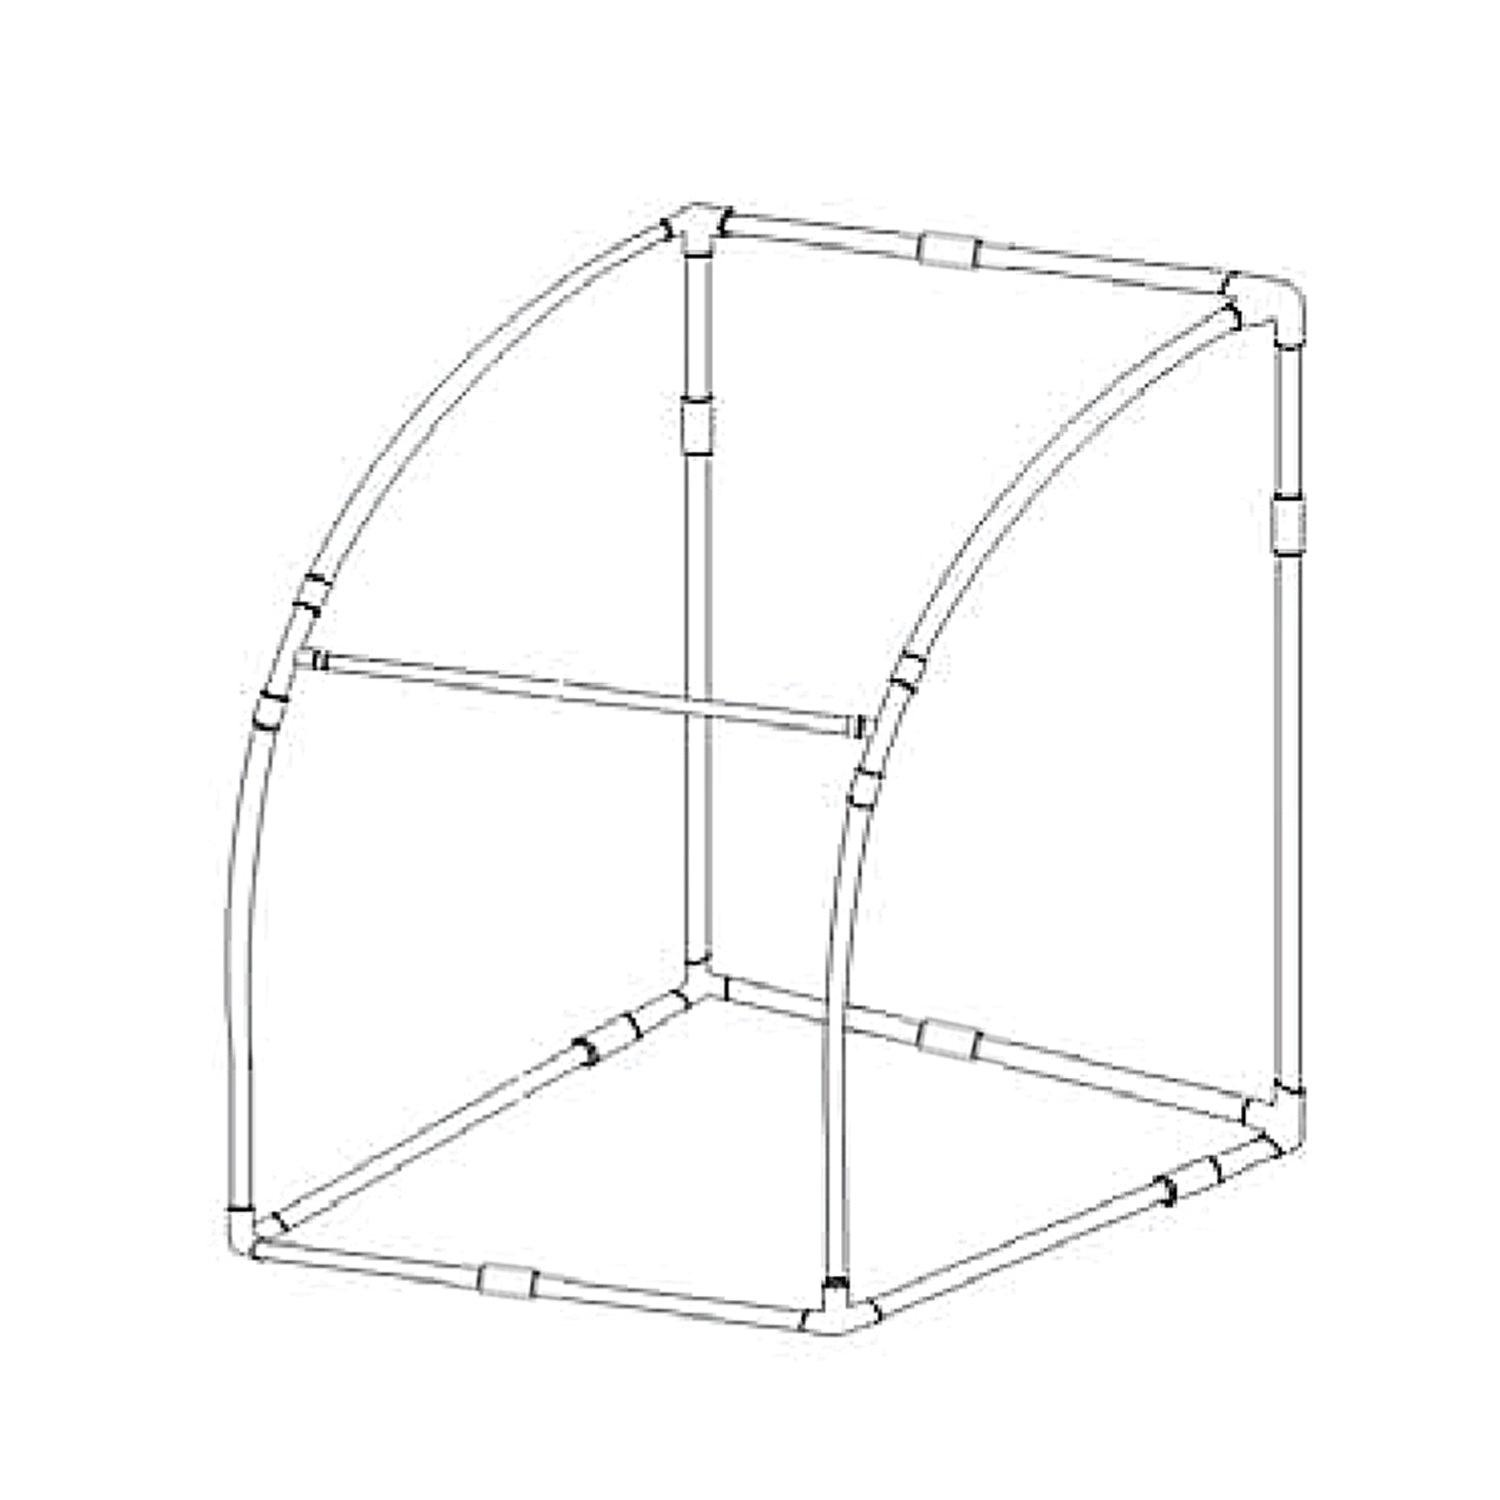 Replacement Steam Sauna PVC Frame | XL Model - Durasage Health